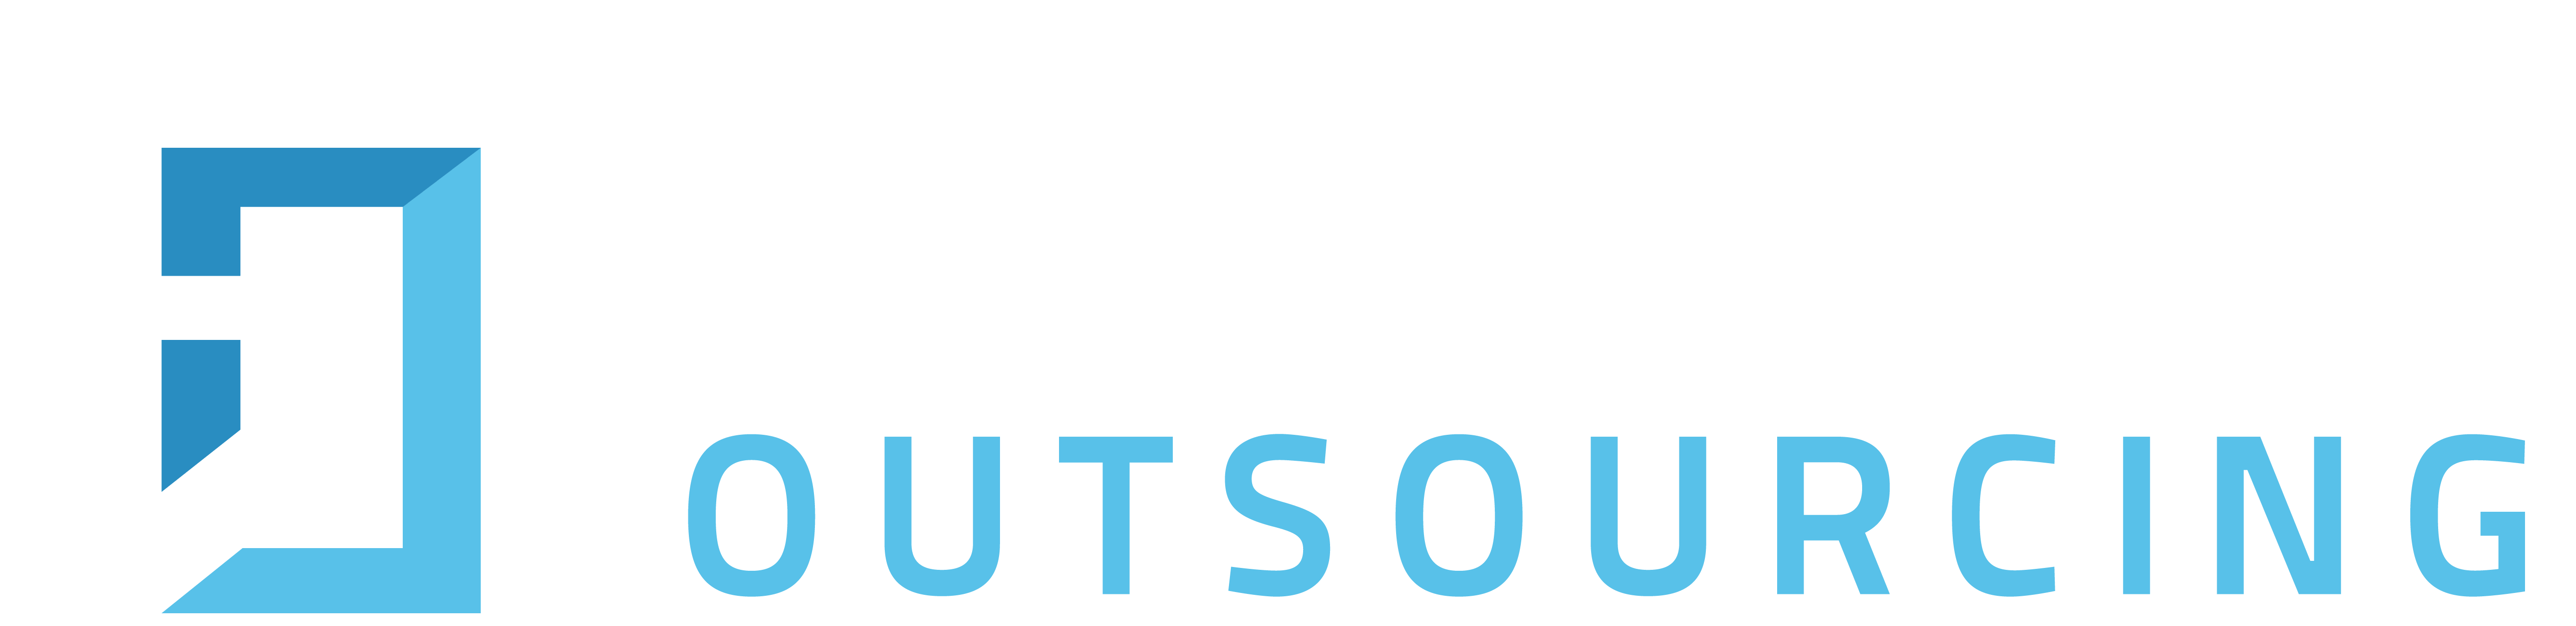 Fiduciary Outsourcing Logo